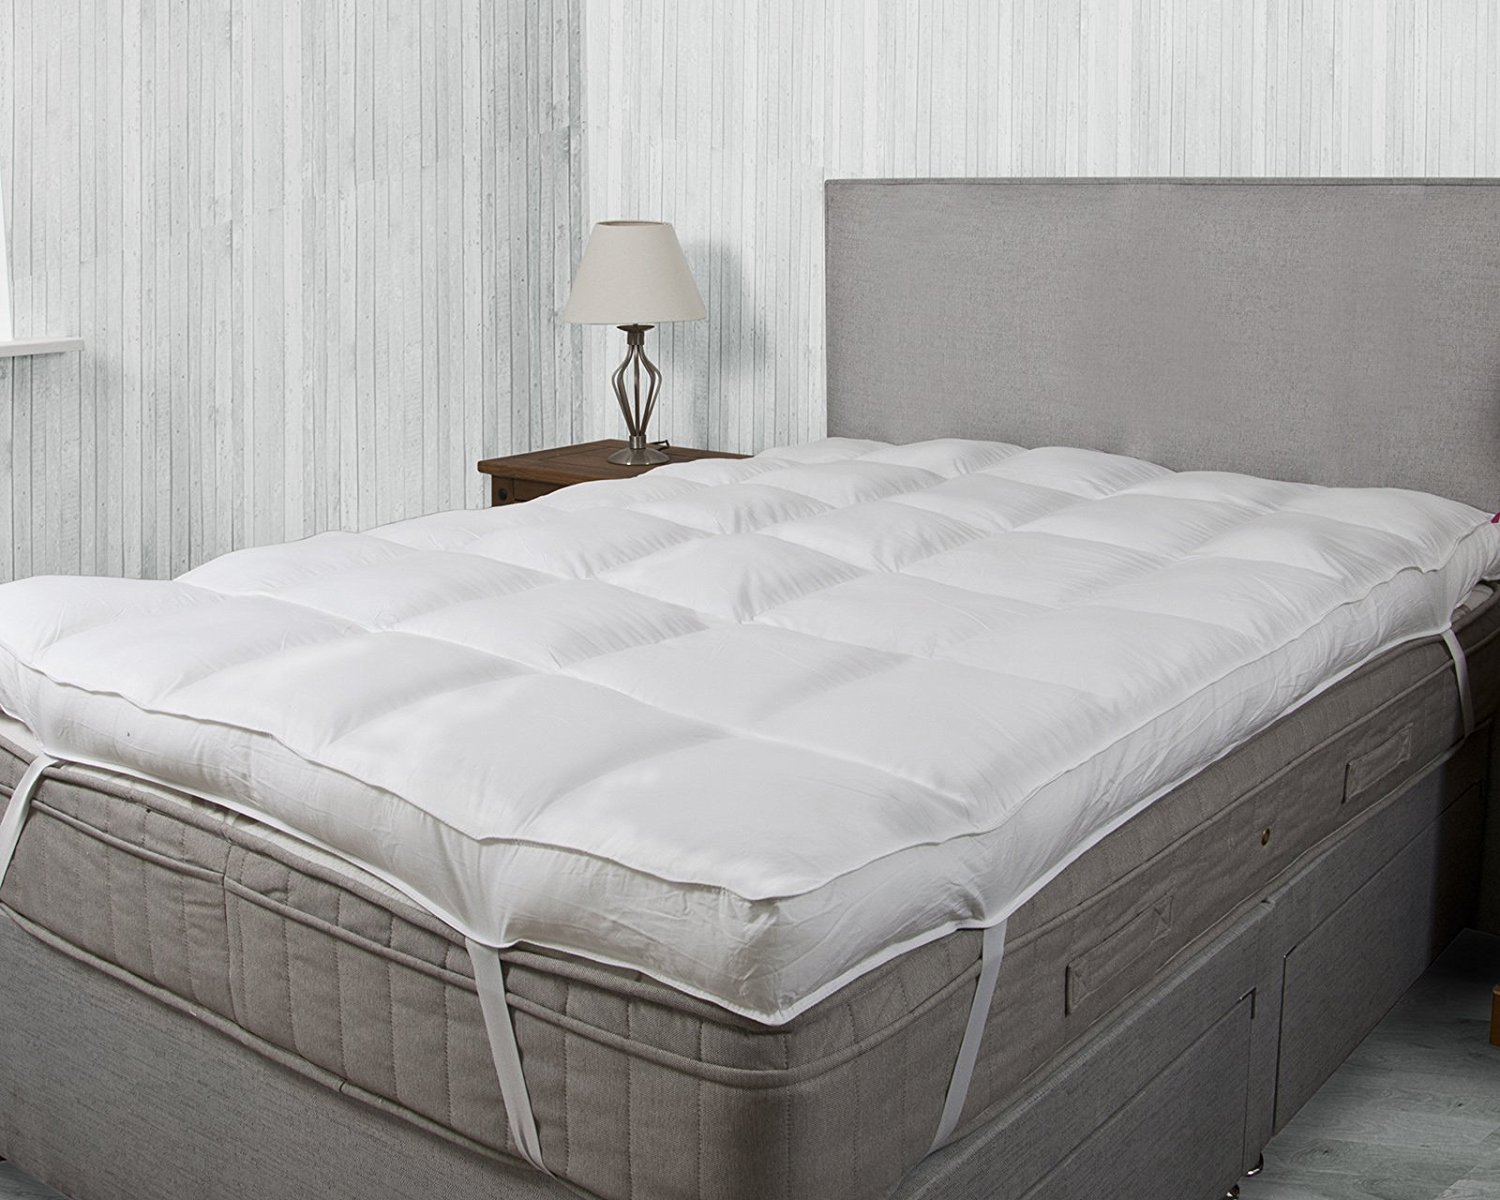 mattress topper for creating comfort